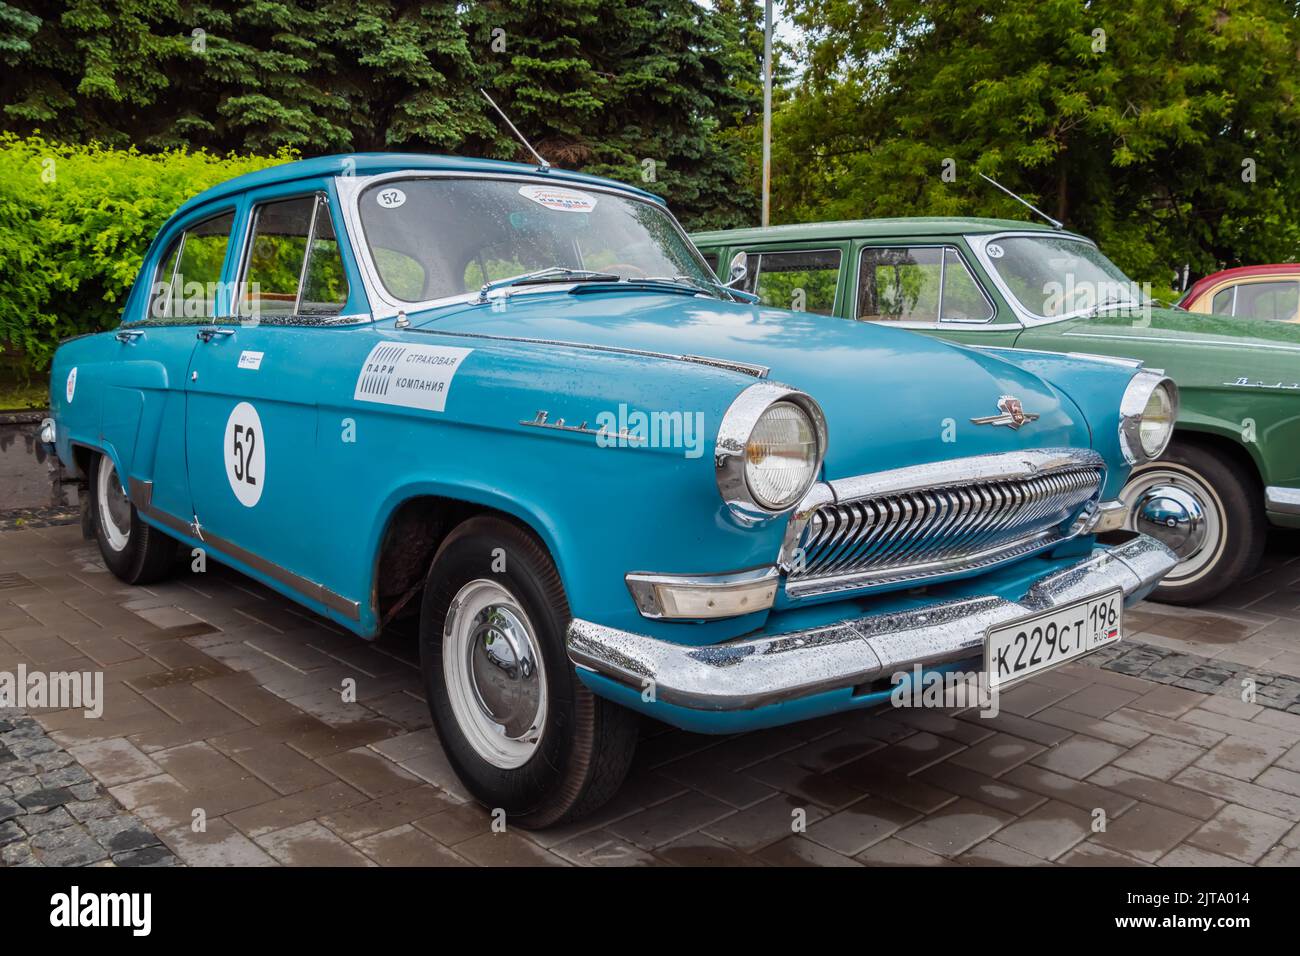 Blue GAZ M21 Volga at Classic Soviet Car Exhibition Stock Photo